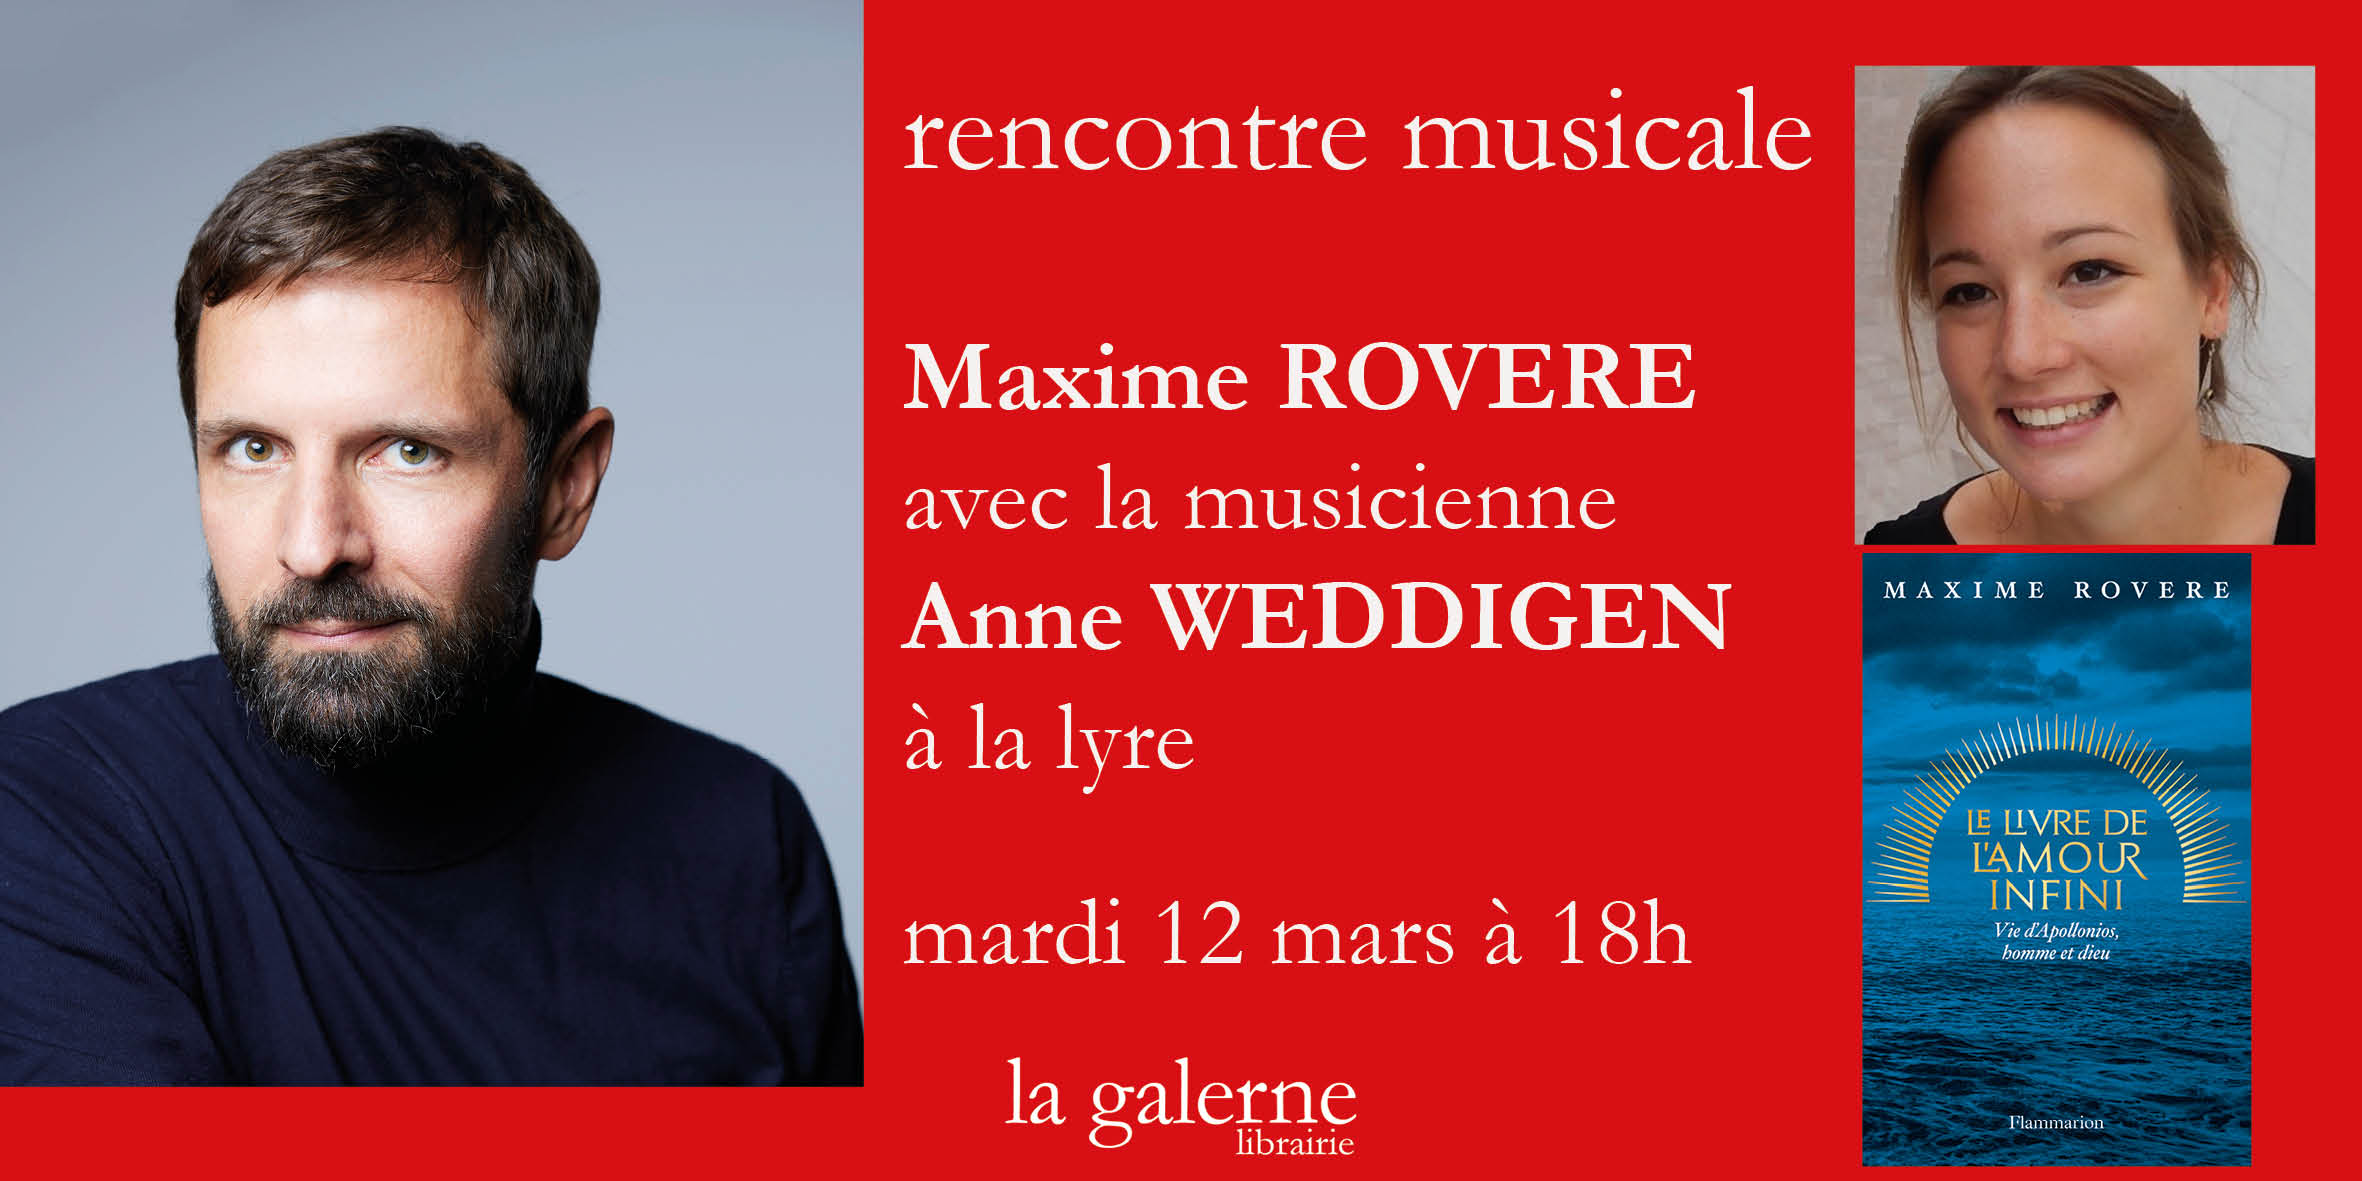 rencontre musicale avec Maxime Rovere